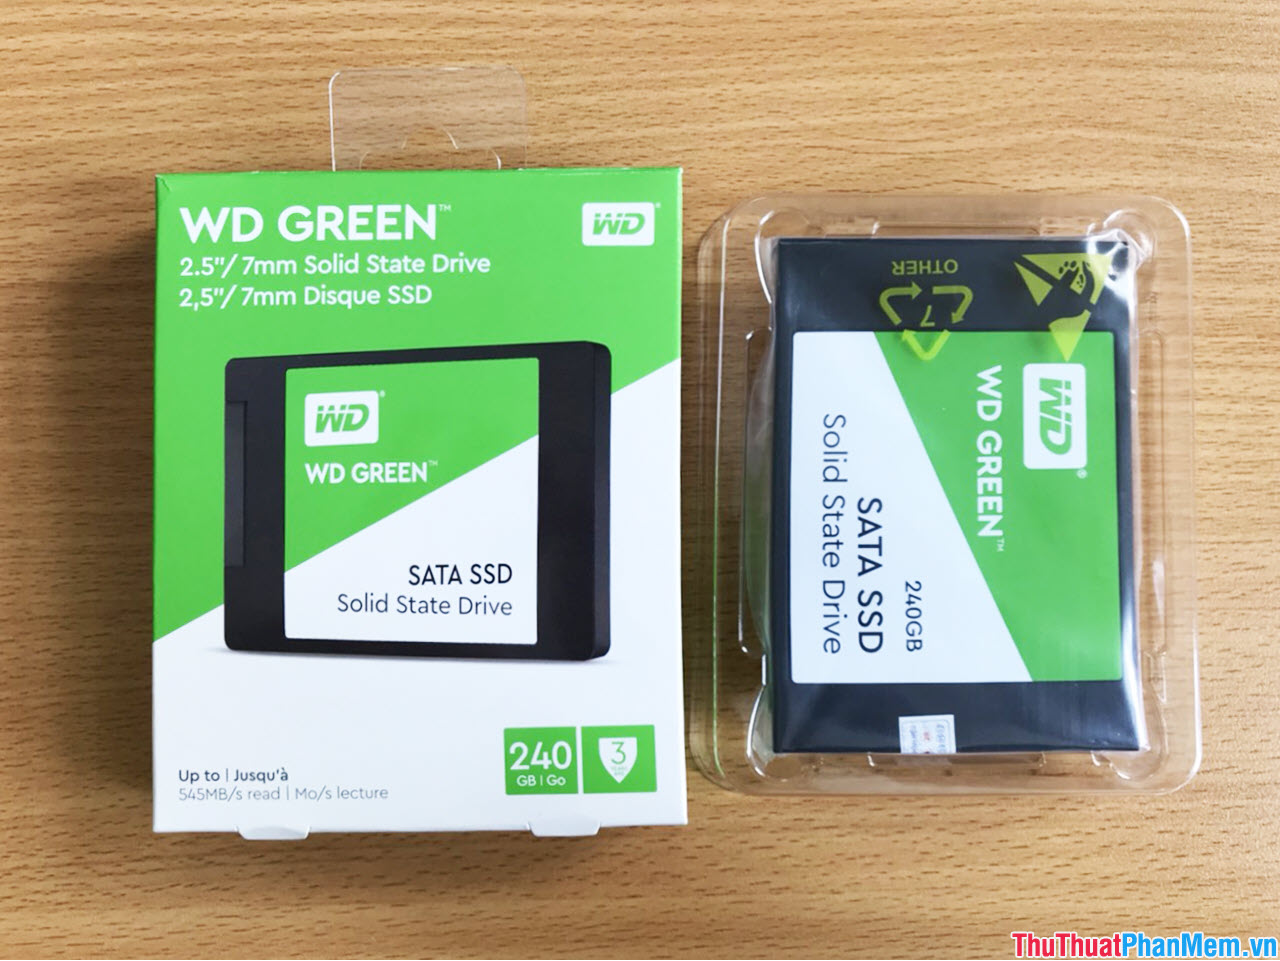 Đánh giá SSD Western Digital Green 240GB